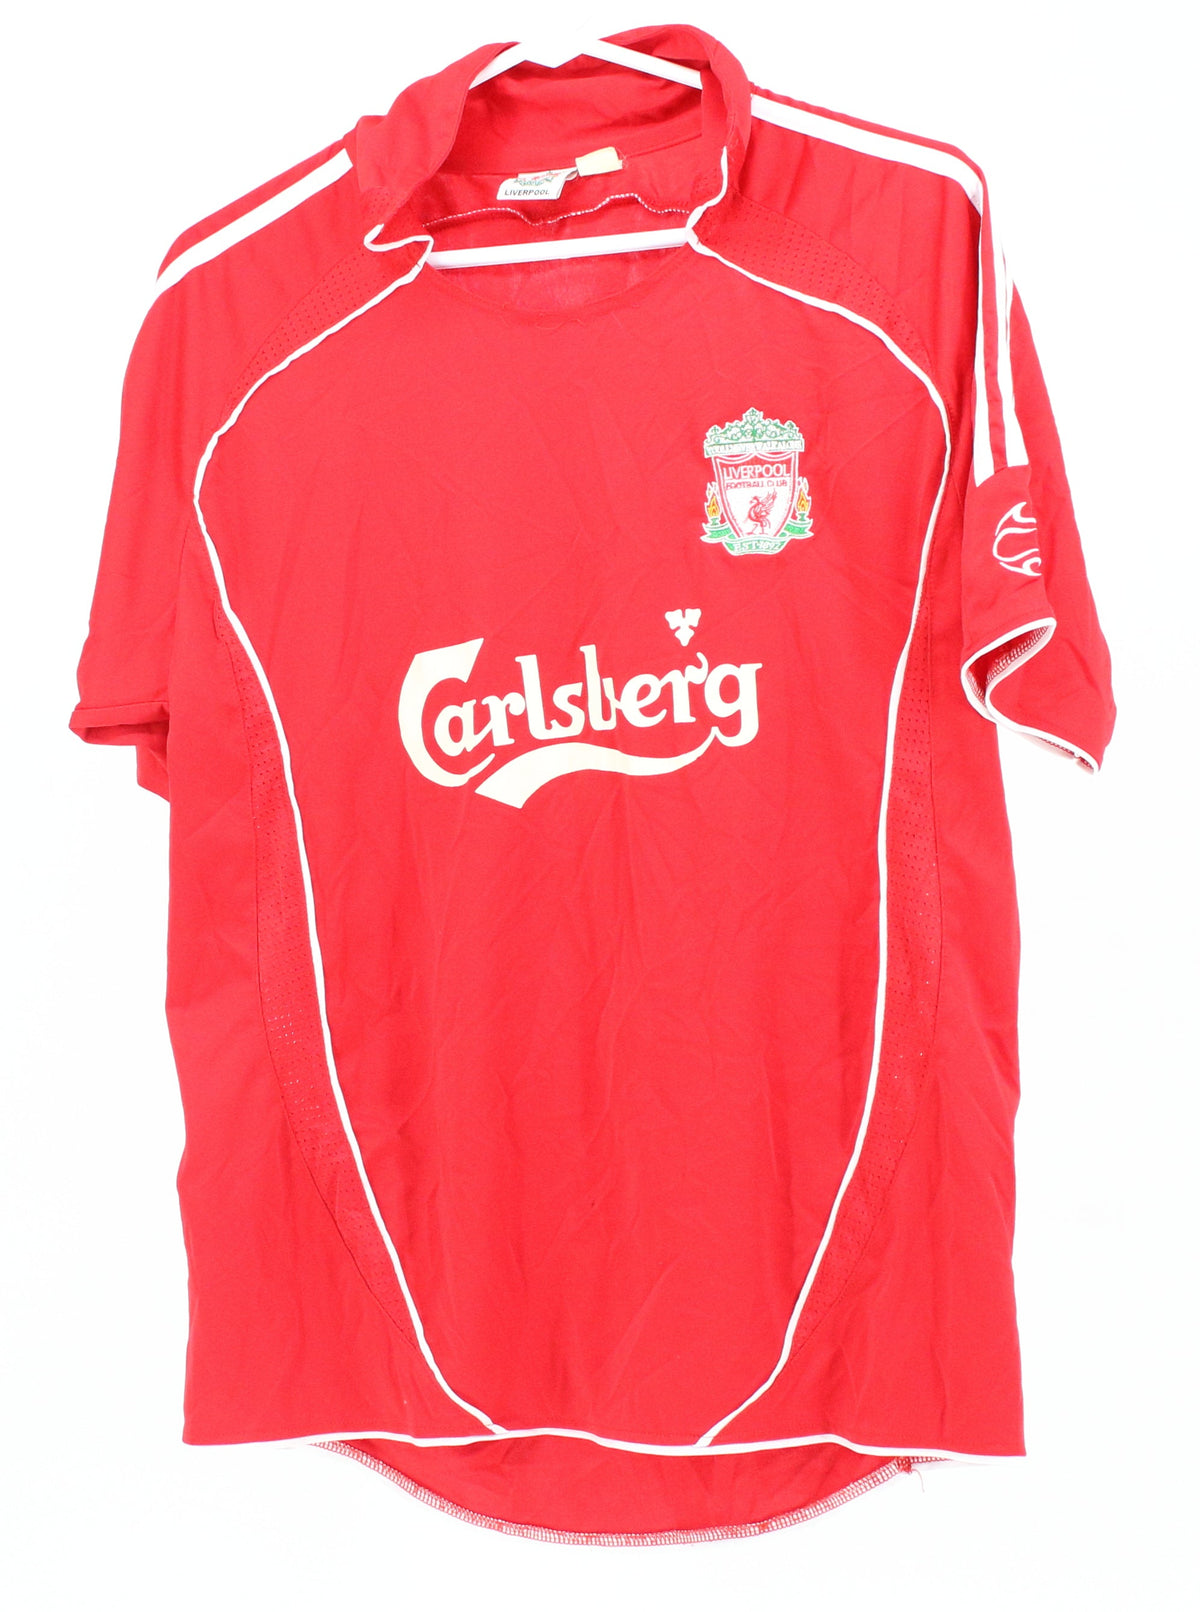 Liverpool Football Club Red Carlsberg Gerrard 8 Jersey